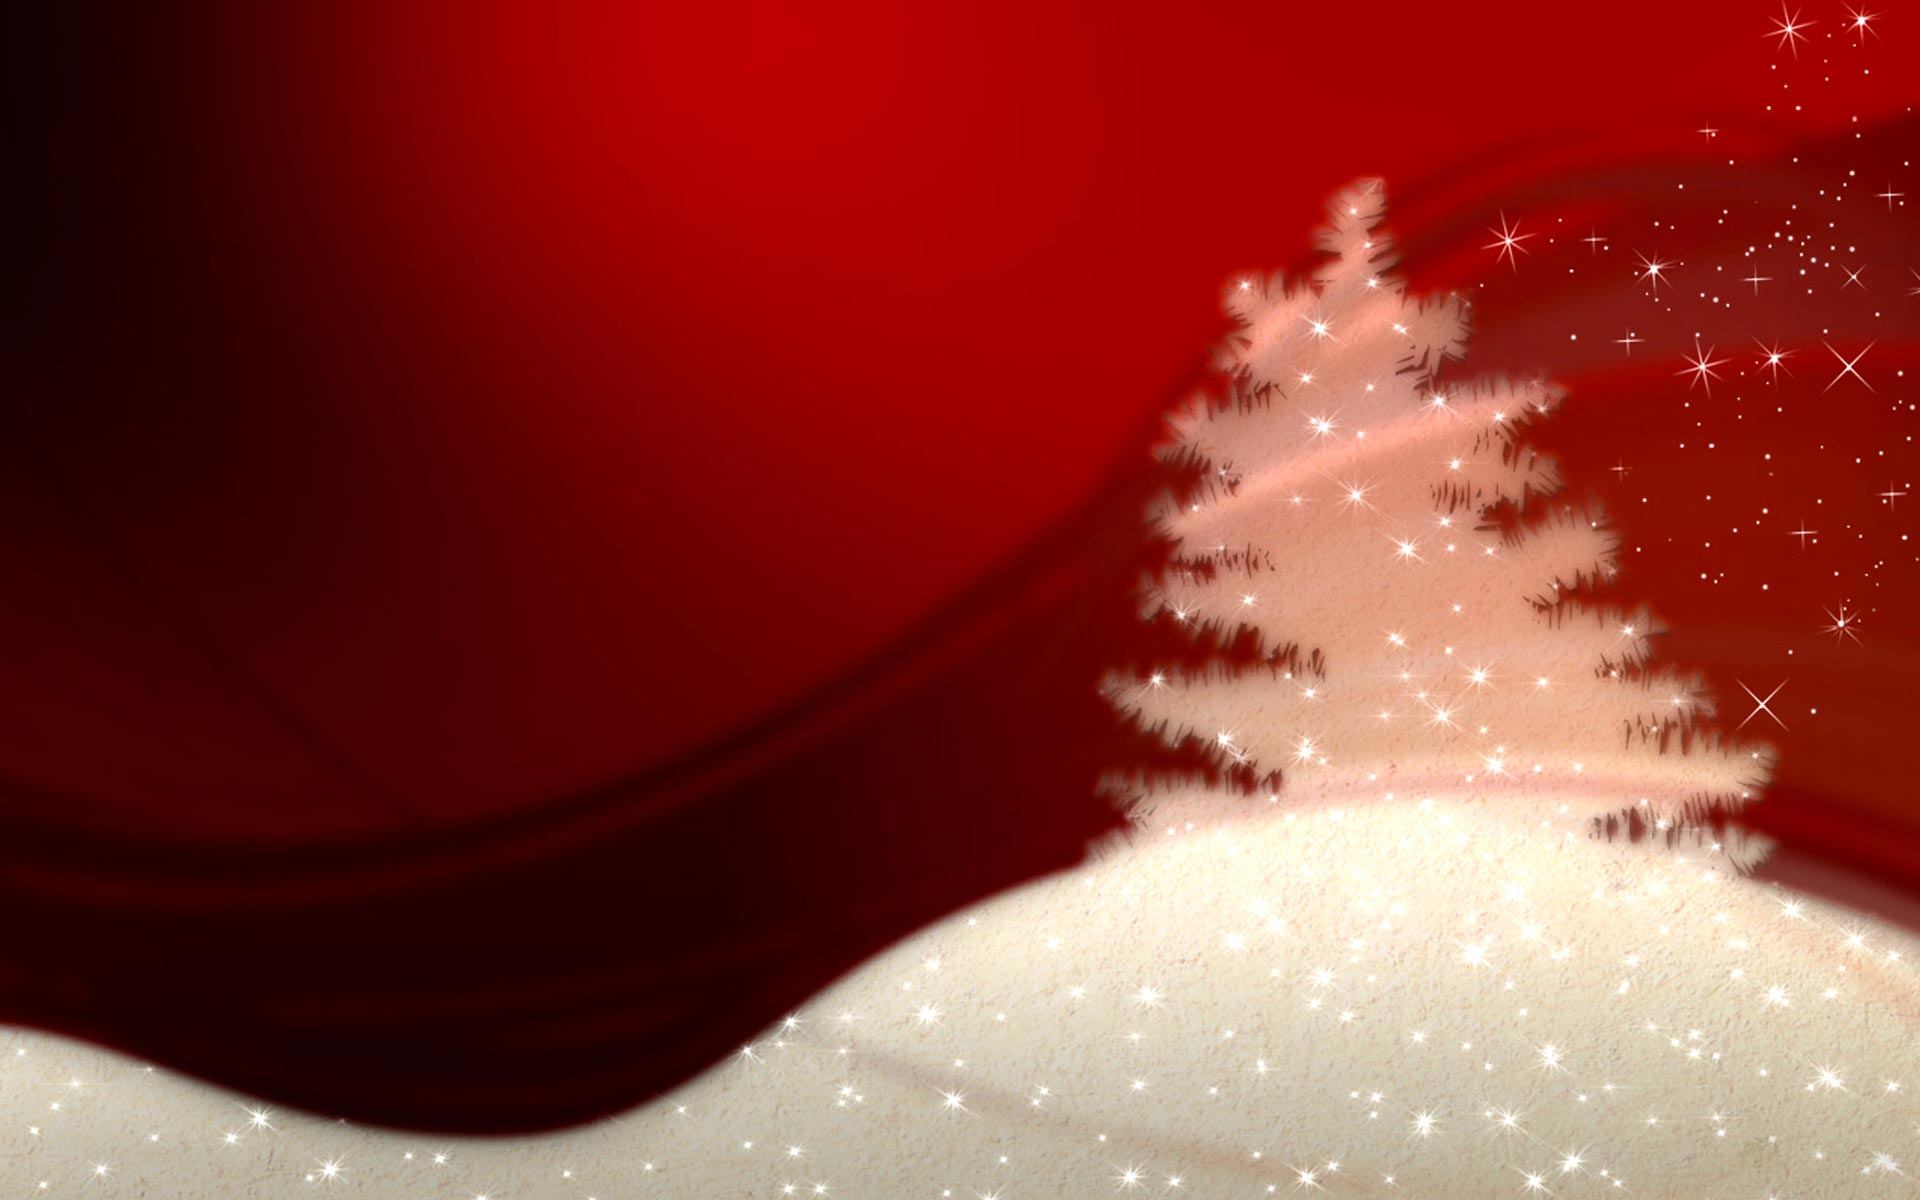 Wallpaper Gt Holiday Gt Christmas Tree Desktop Backgrounds Hd ...